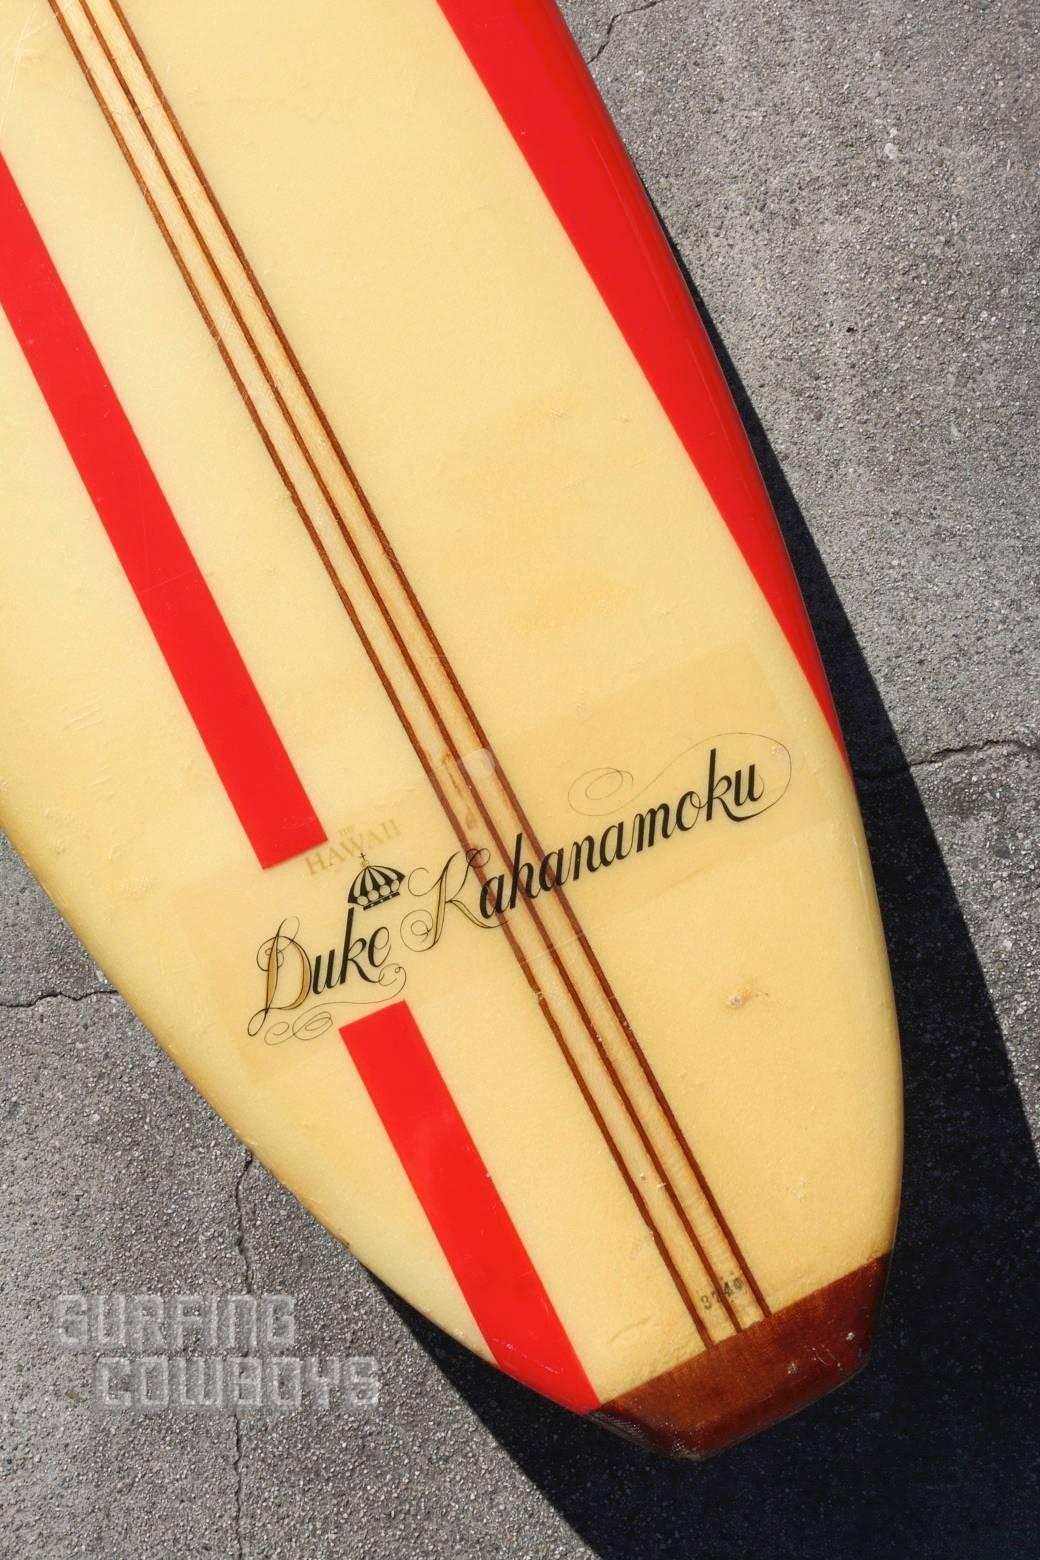 Hawaiian Original Duke Kahanamoku Longboard Surfboard with Red Stripes circa 1965  